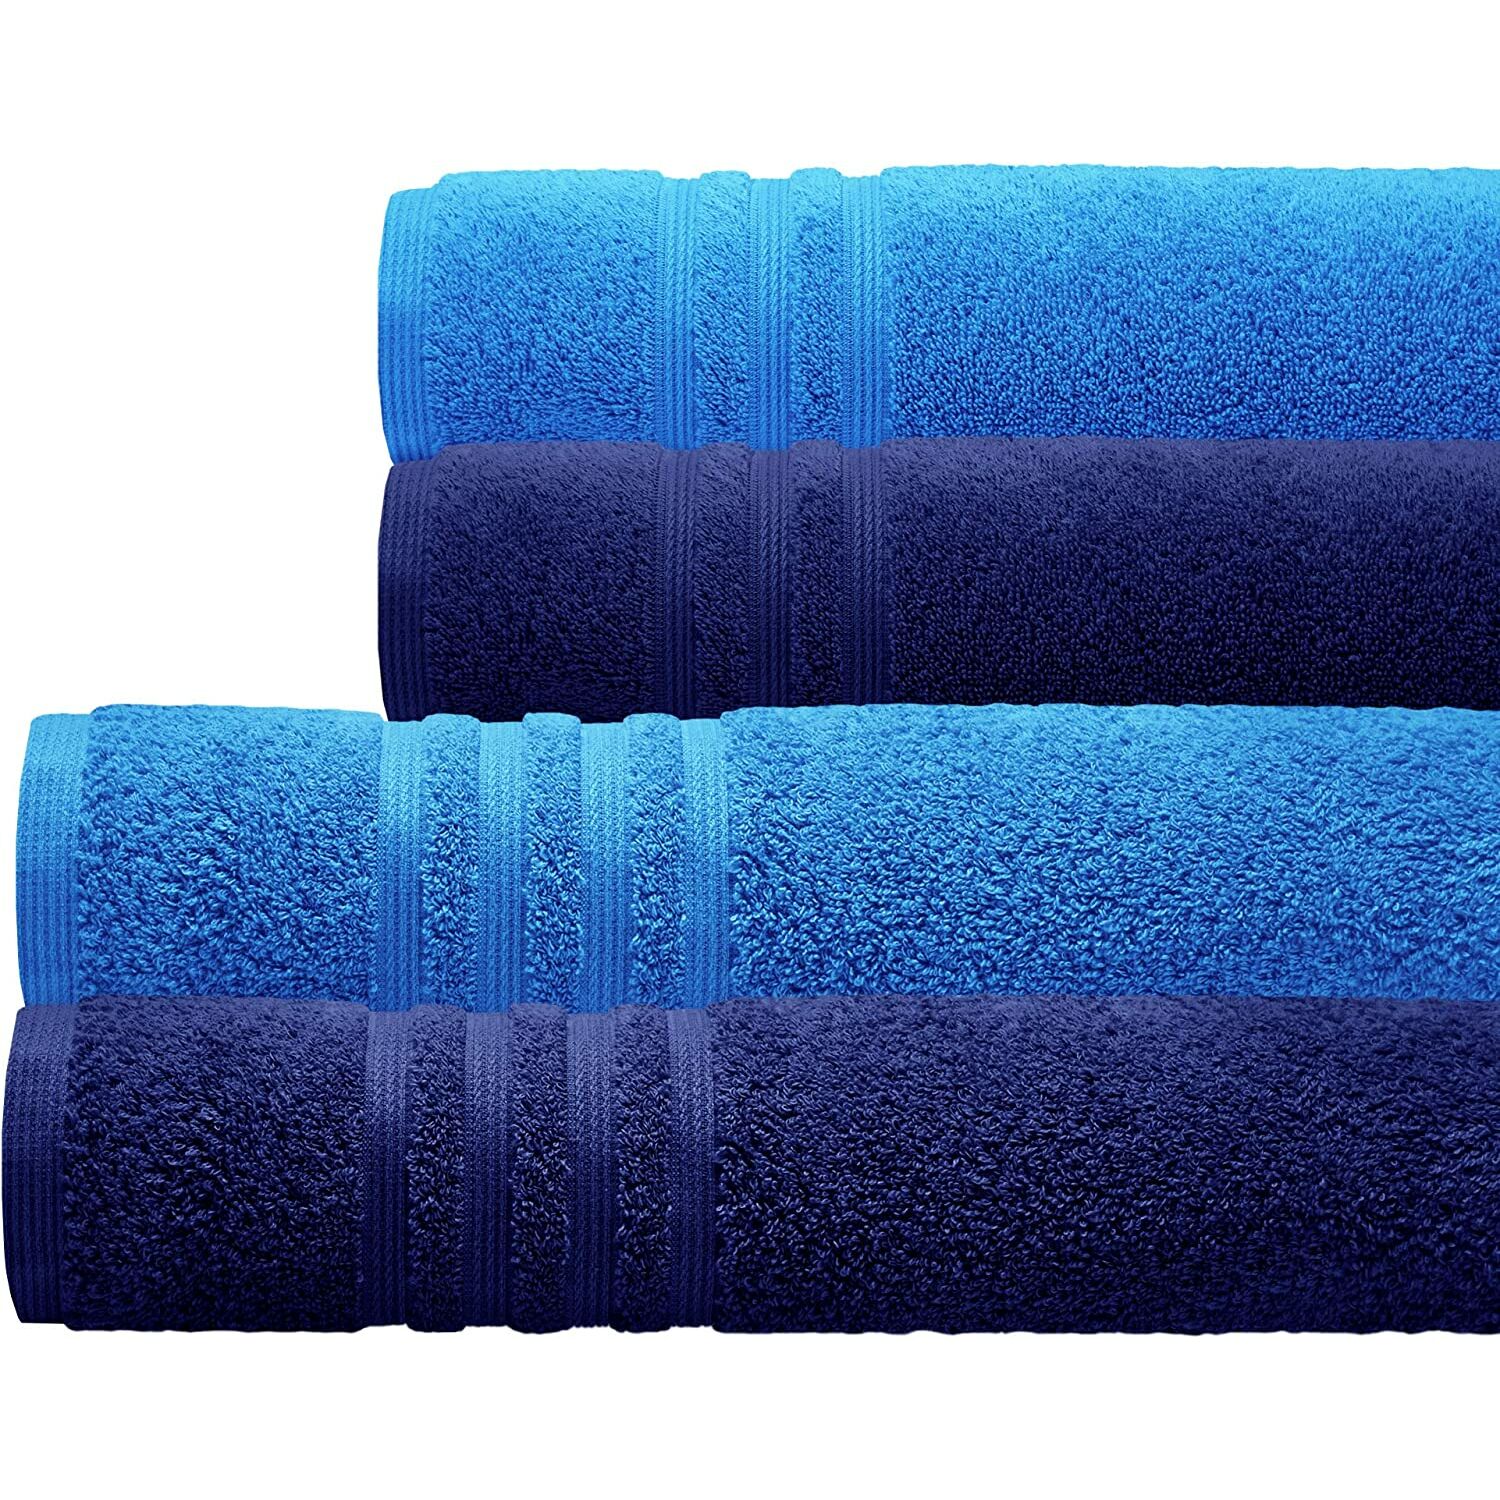 begrenzte Verkaufsstelle Handtücher :: Hochwertiges Duschhandtuch Set, Marine 50x100 Blau 2X 70x140, 2X – Baumwolltuch Capri London –